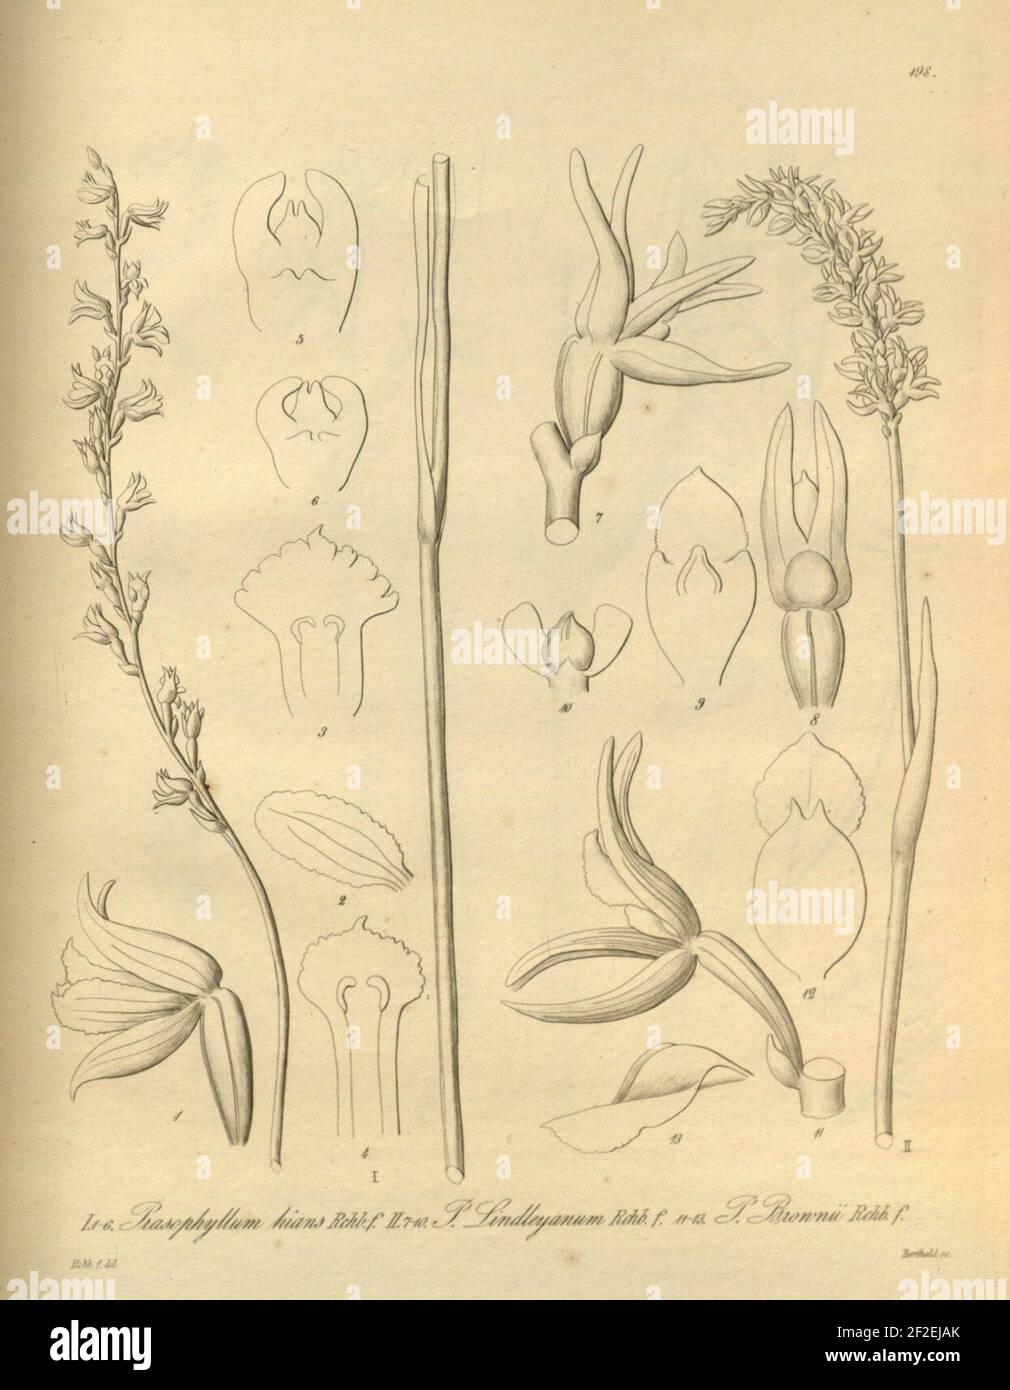 Prasophyllum hians - Prasophyllum lindleyanum - Prasophyllum brownii - Xenia 2 pl 198. Stock Photo